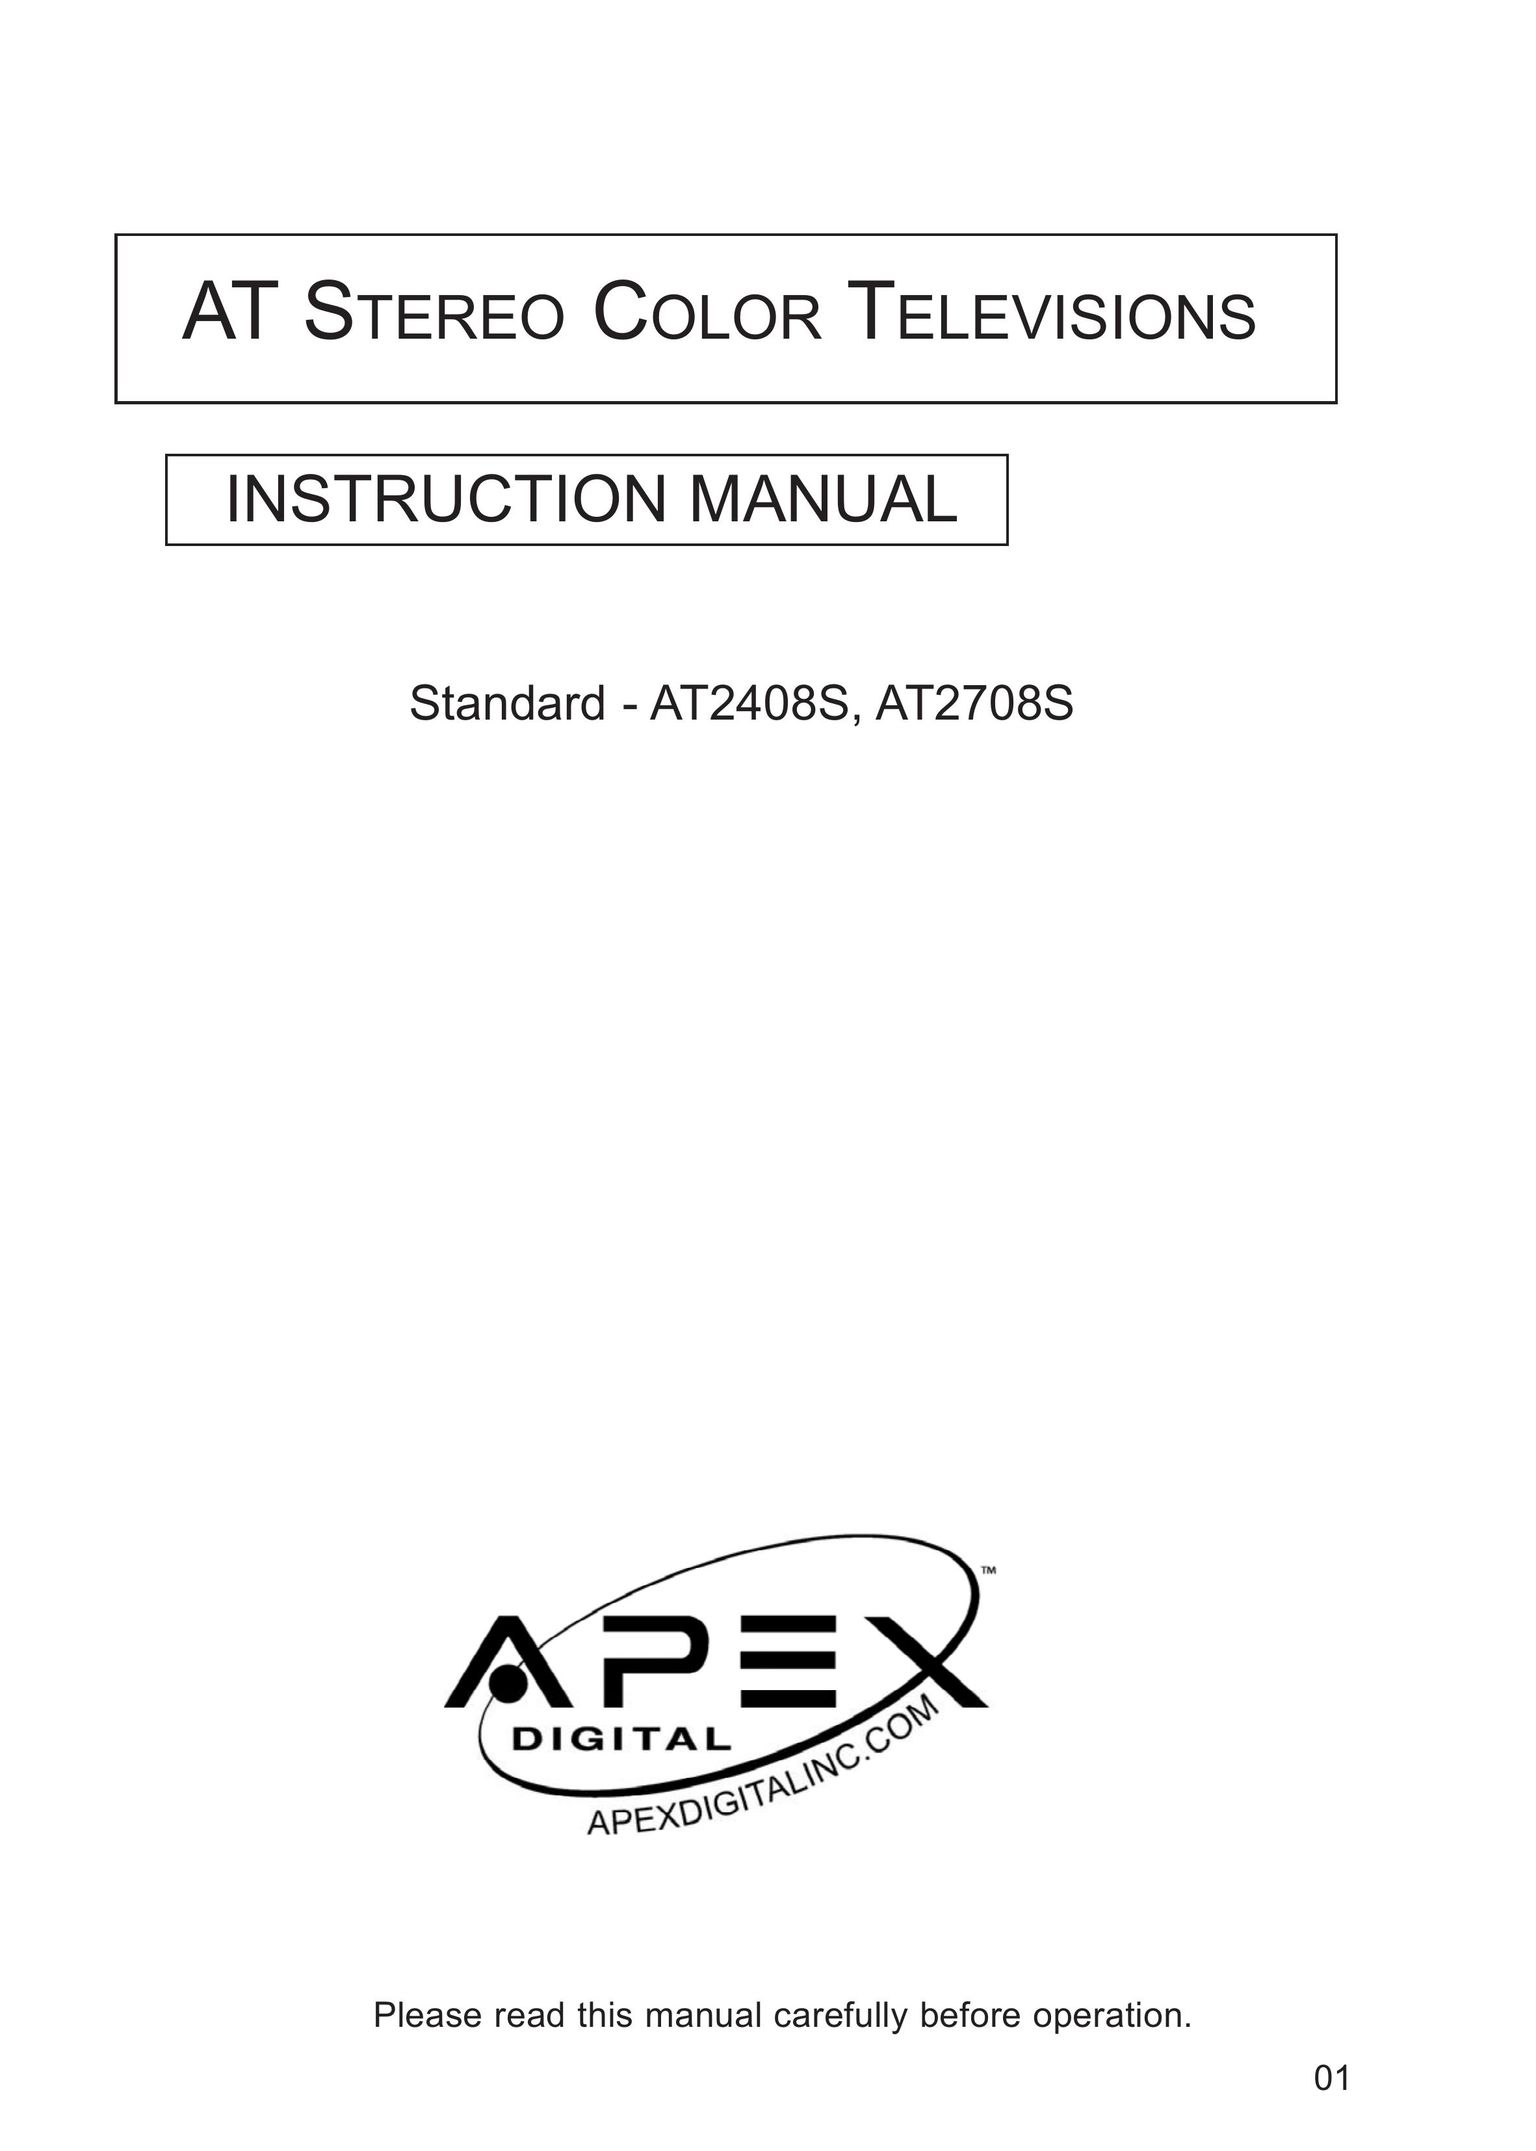 Apex Digital AT2708S, AT2408S CRT Television User Manual